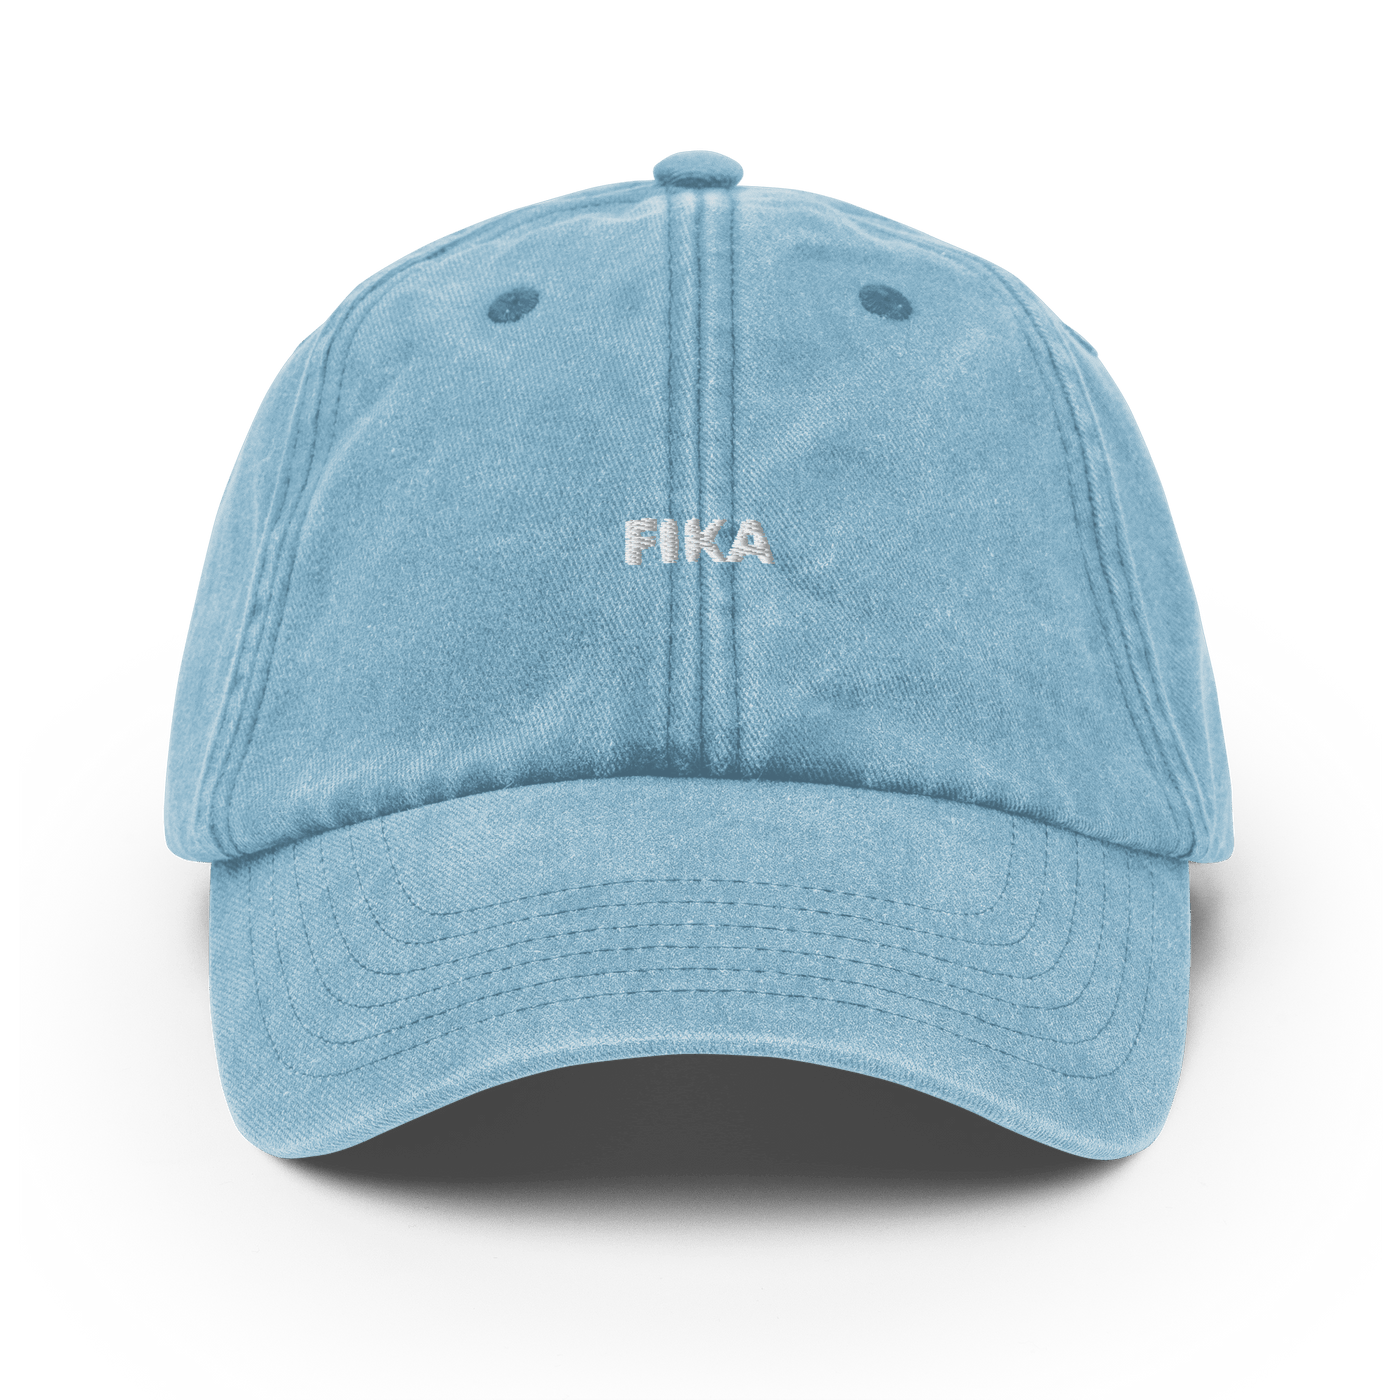 FIKA Vintage Hat - Vintage Light Denim - - Just Another Cap Store